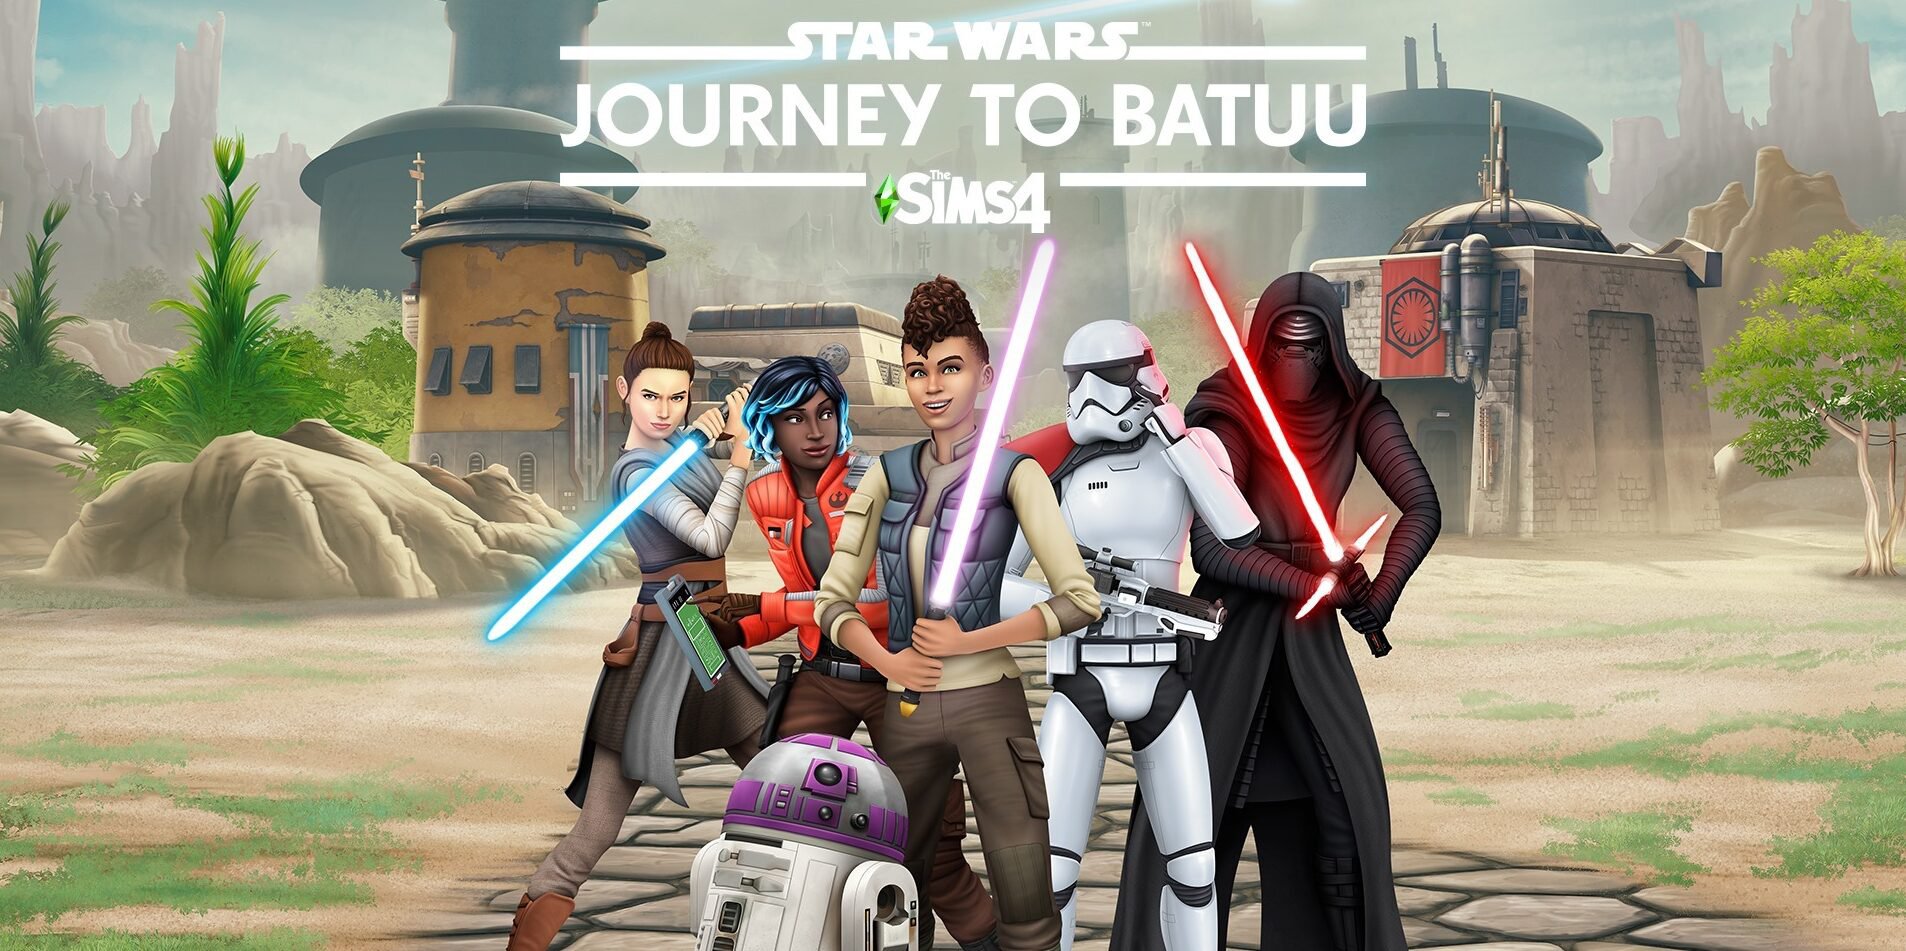 The Sims 4 Star Wars Výprava na Batuu 2